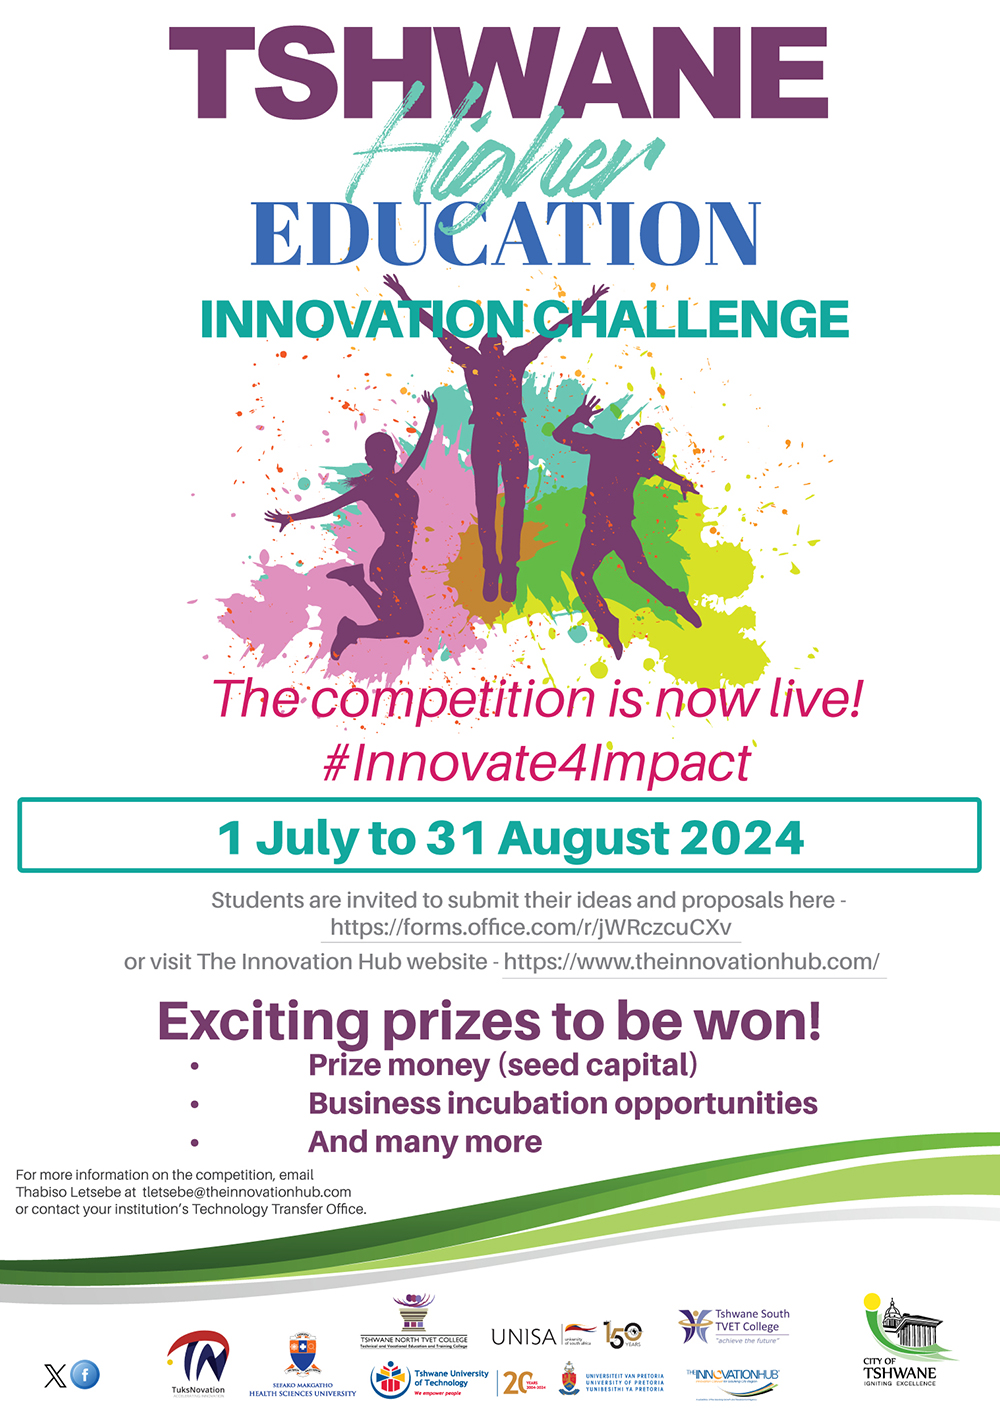 2Higher-education-innovation-challenge.jpg